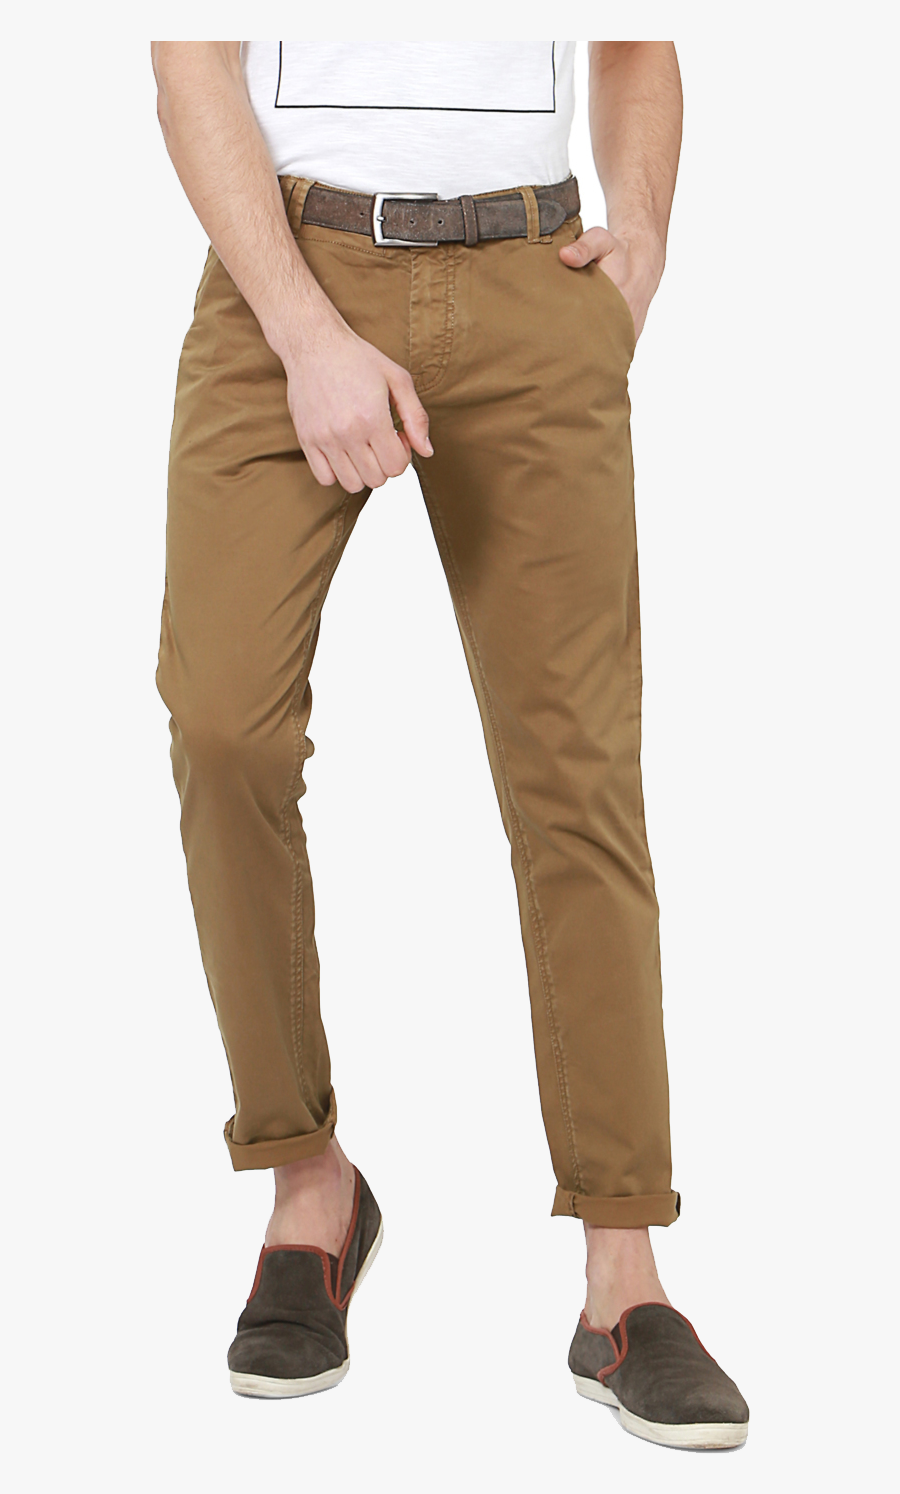 Khaki Pants Png - Pocket, Transparent Clipart